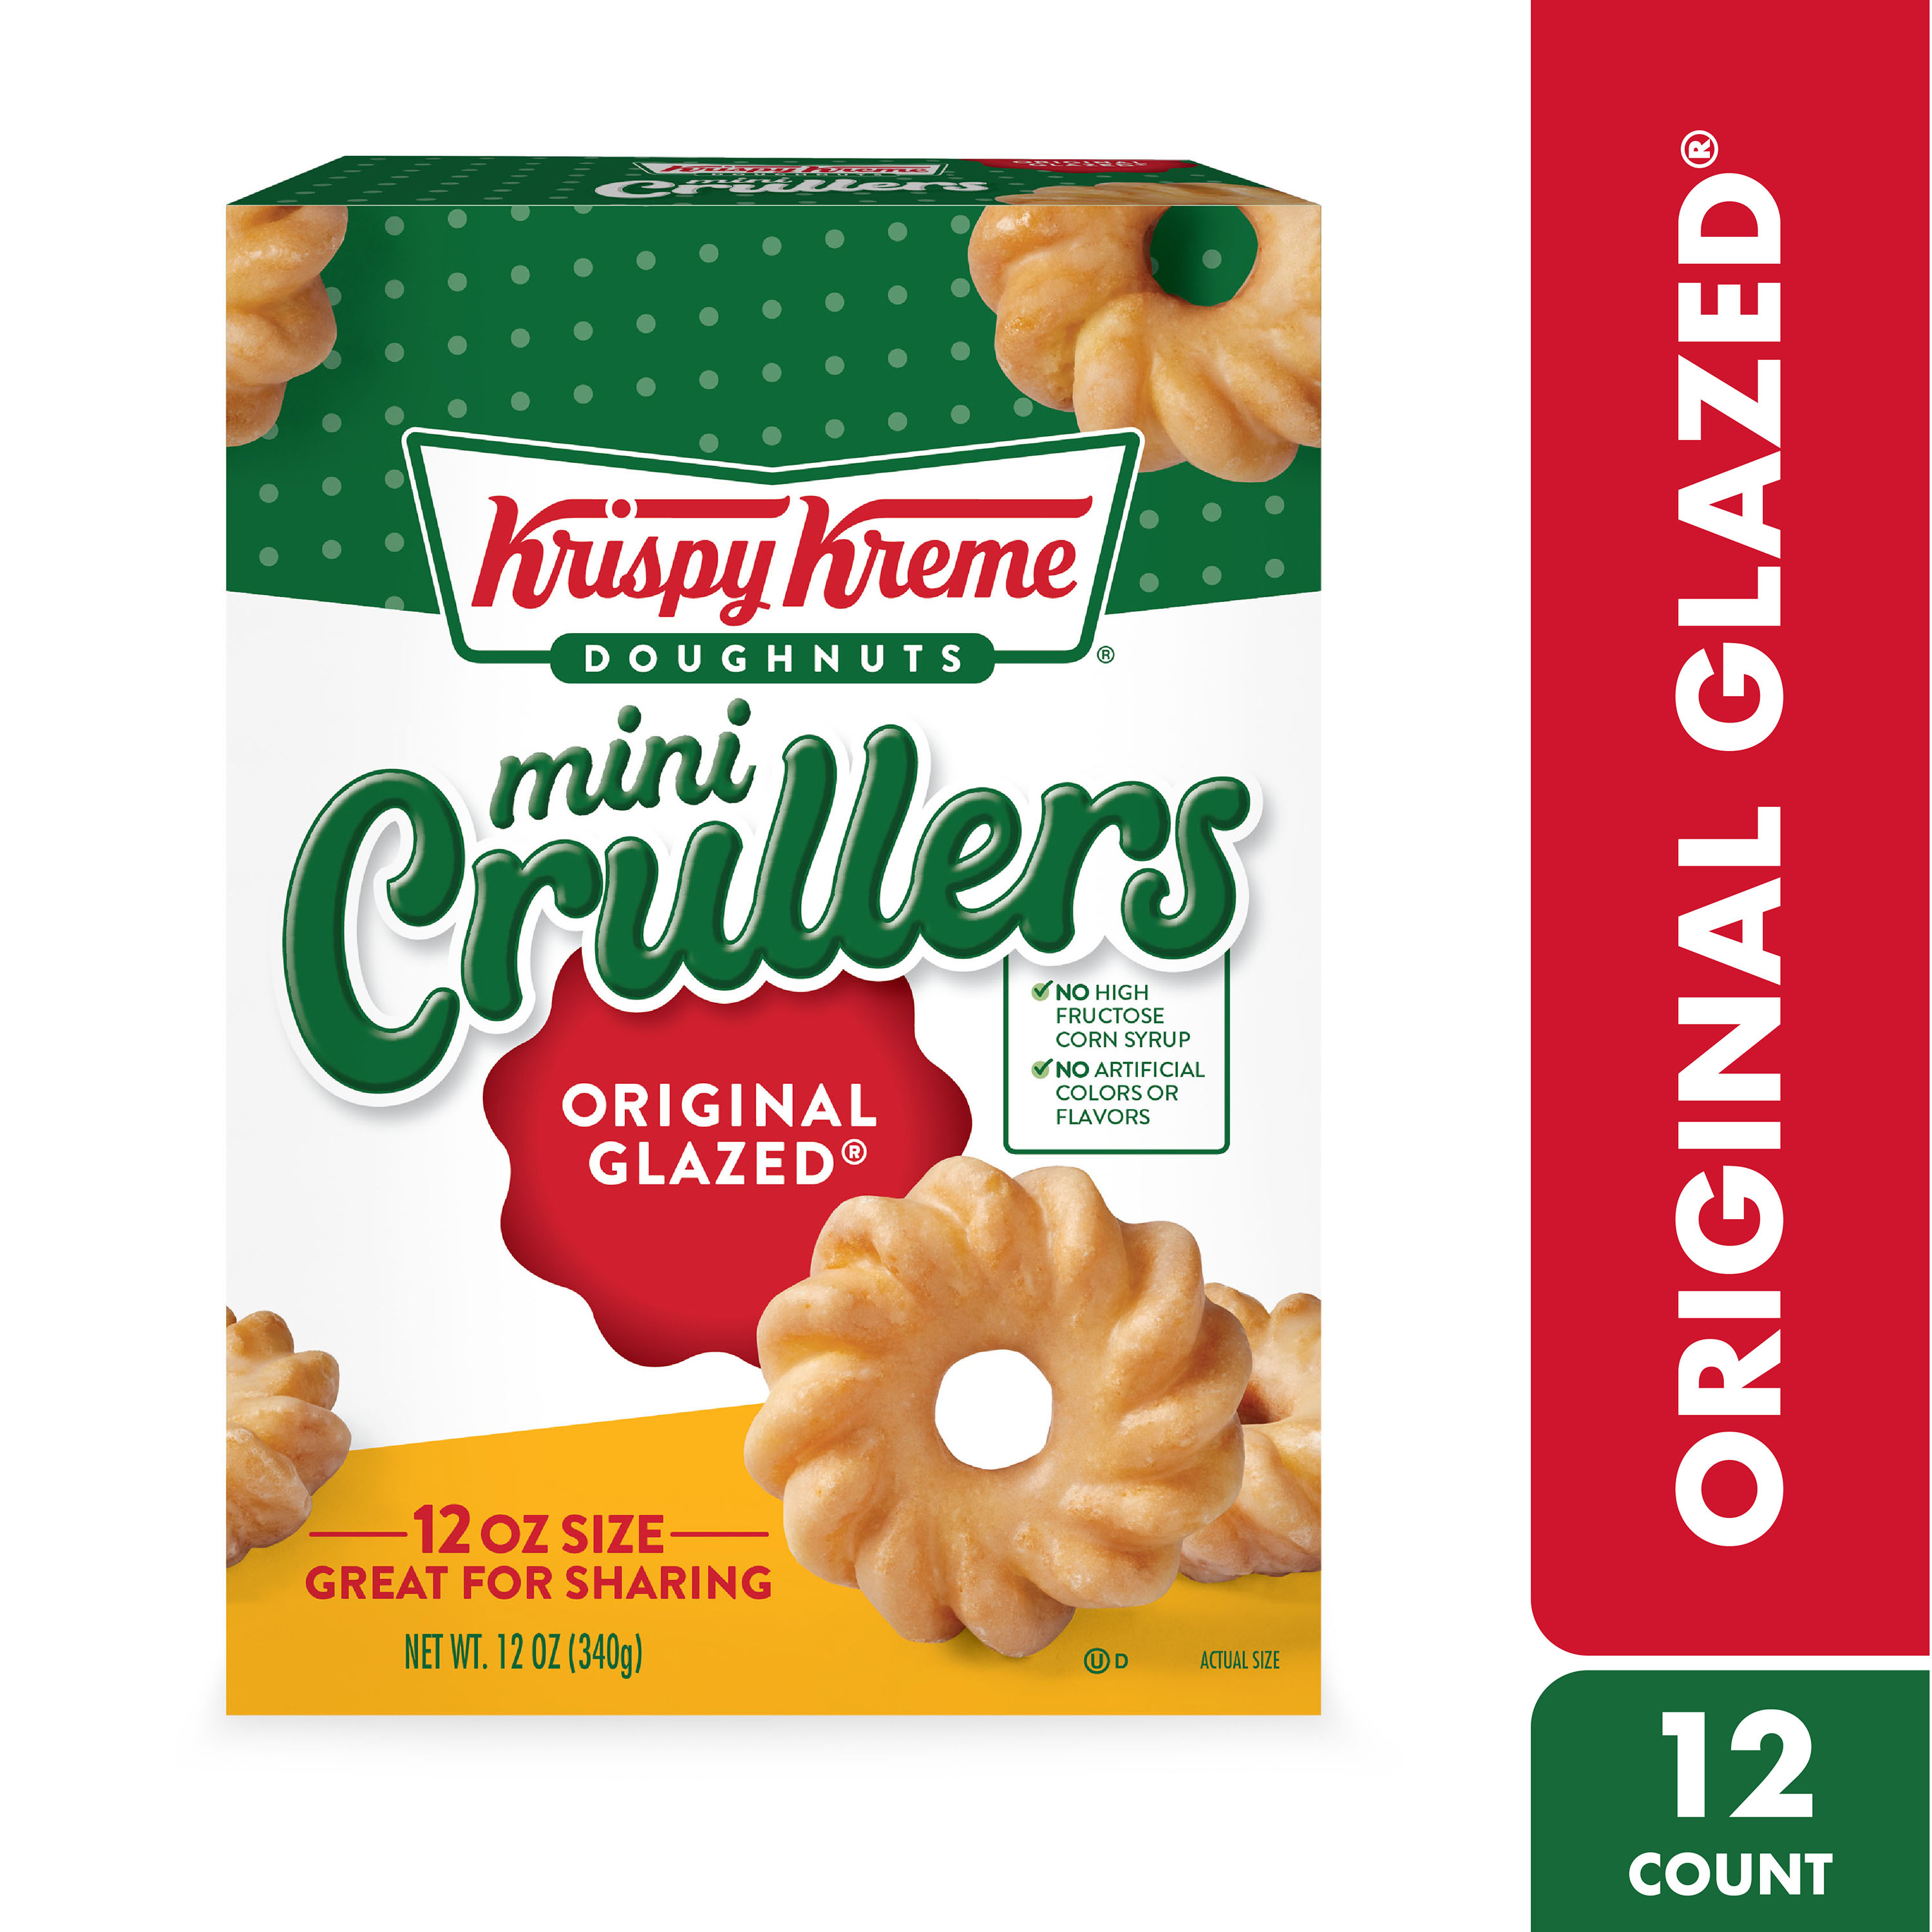 Krispy Kreme Original Glazed Crullers 12 oz - image 1 of 6